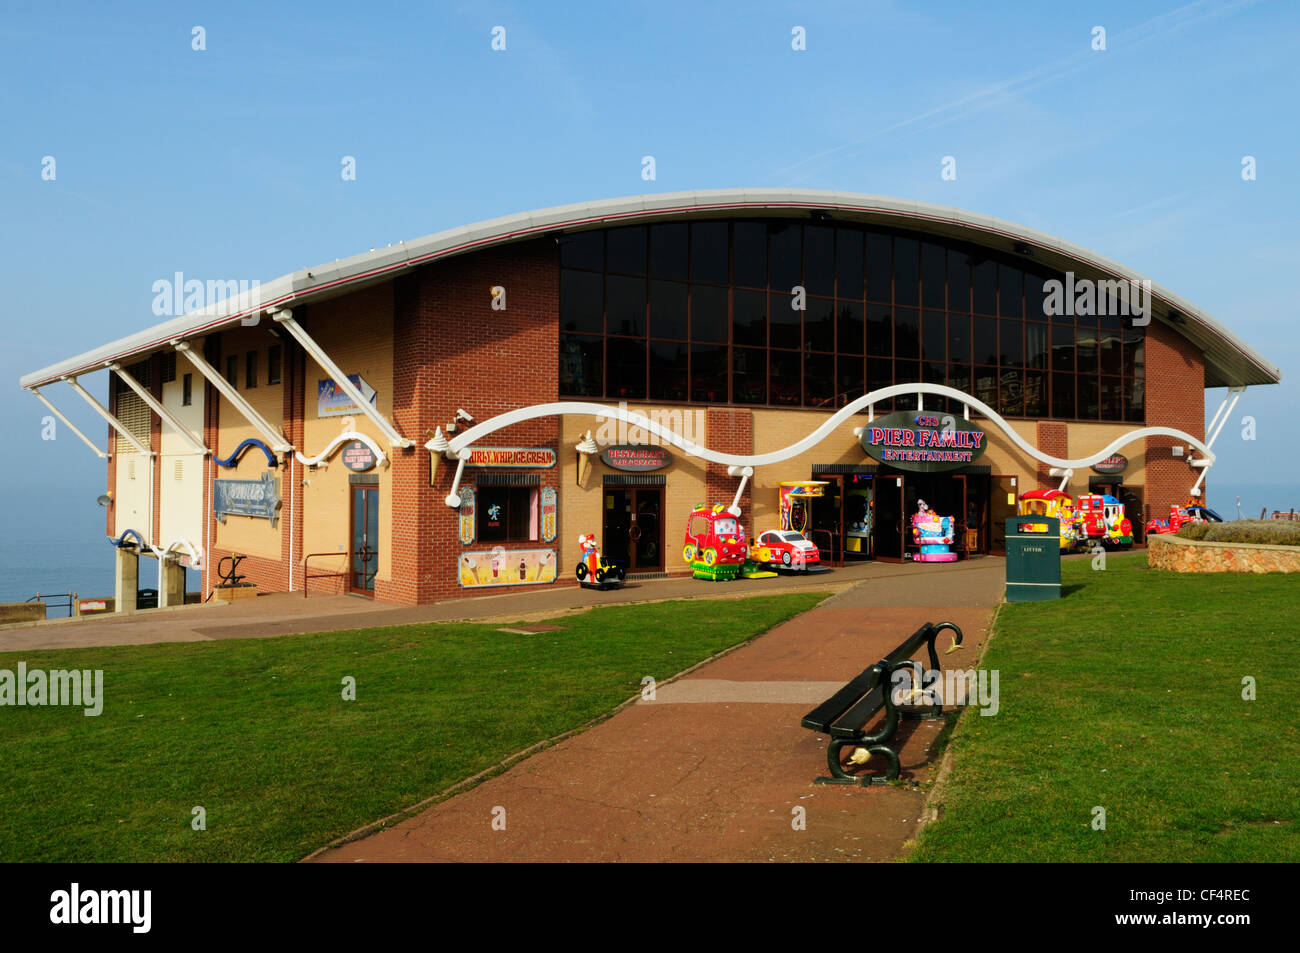 CHS Pier Family Entertainment Amusement Arcade, Hunstanton, Norfolk, England, UK Stock Photo